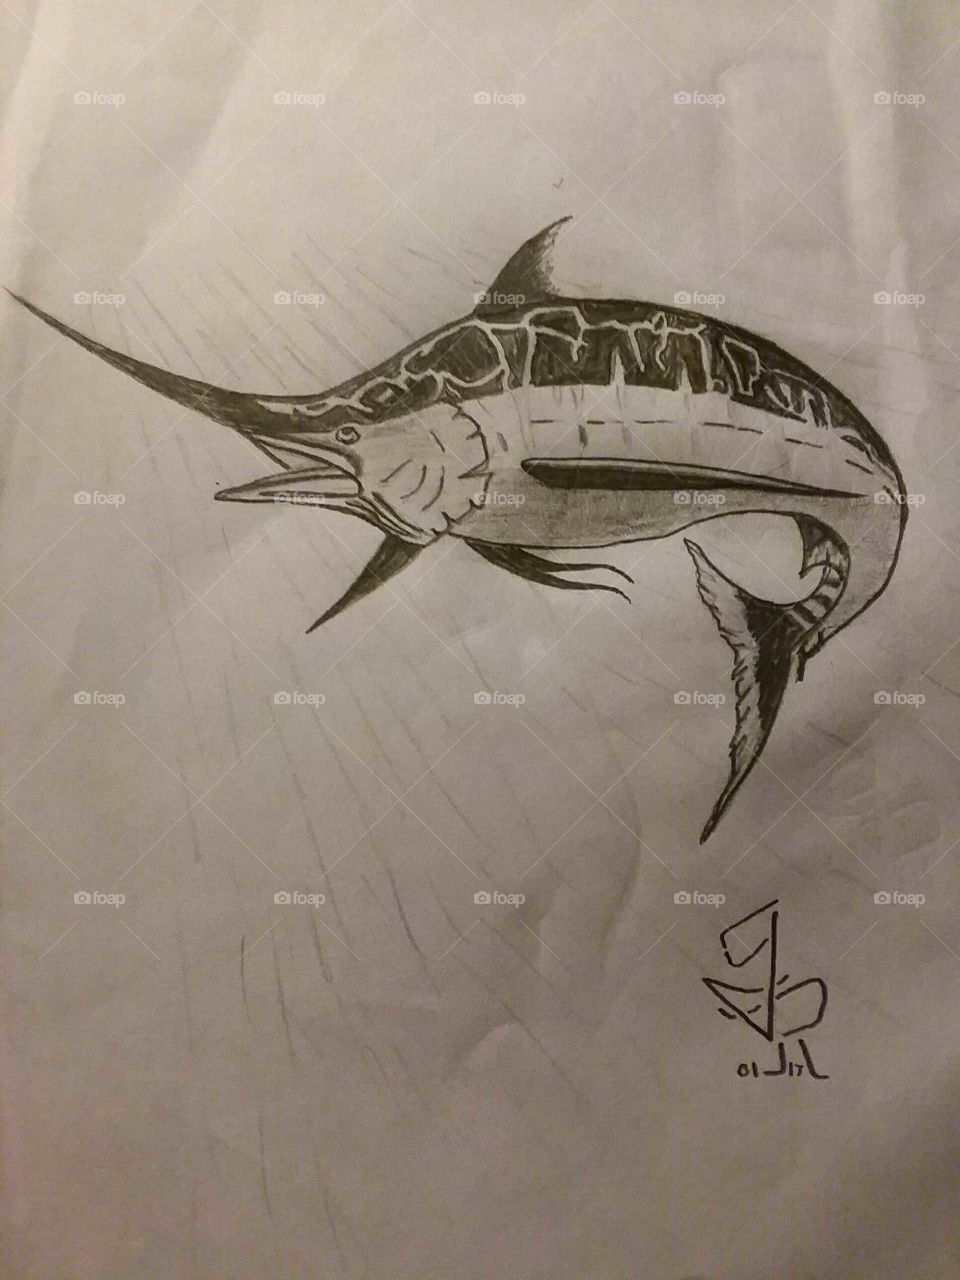 My Pencil Sketch: Sail Fish